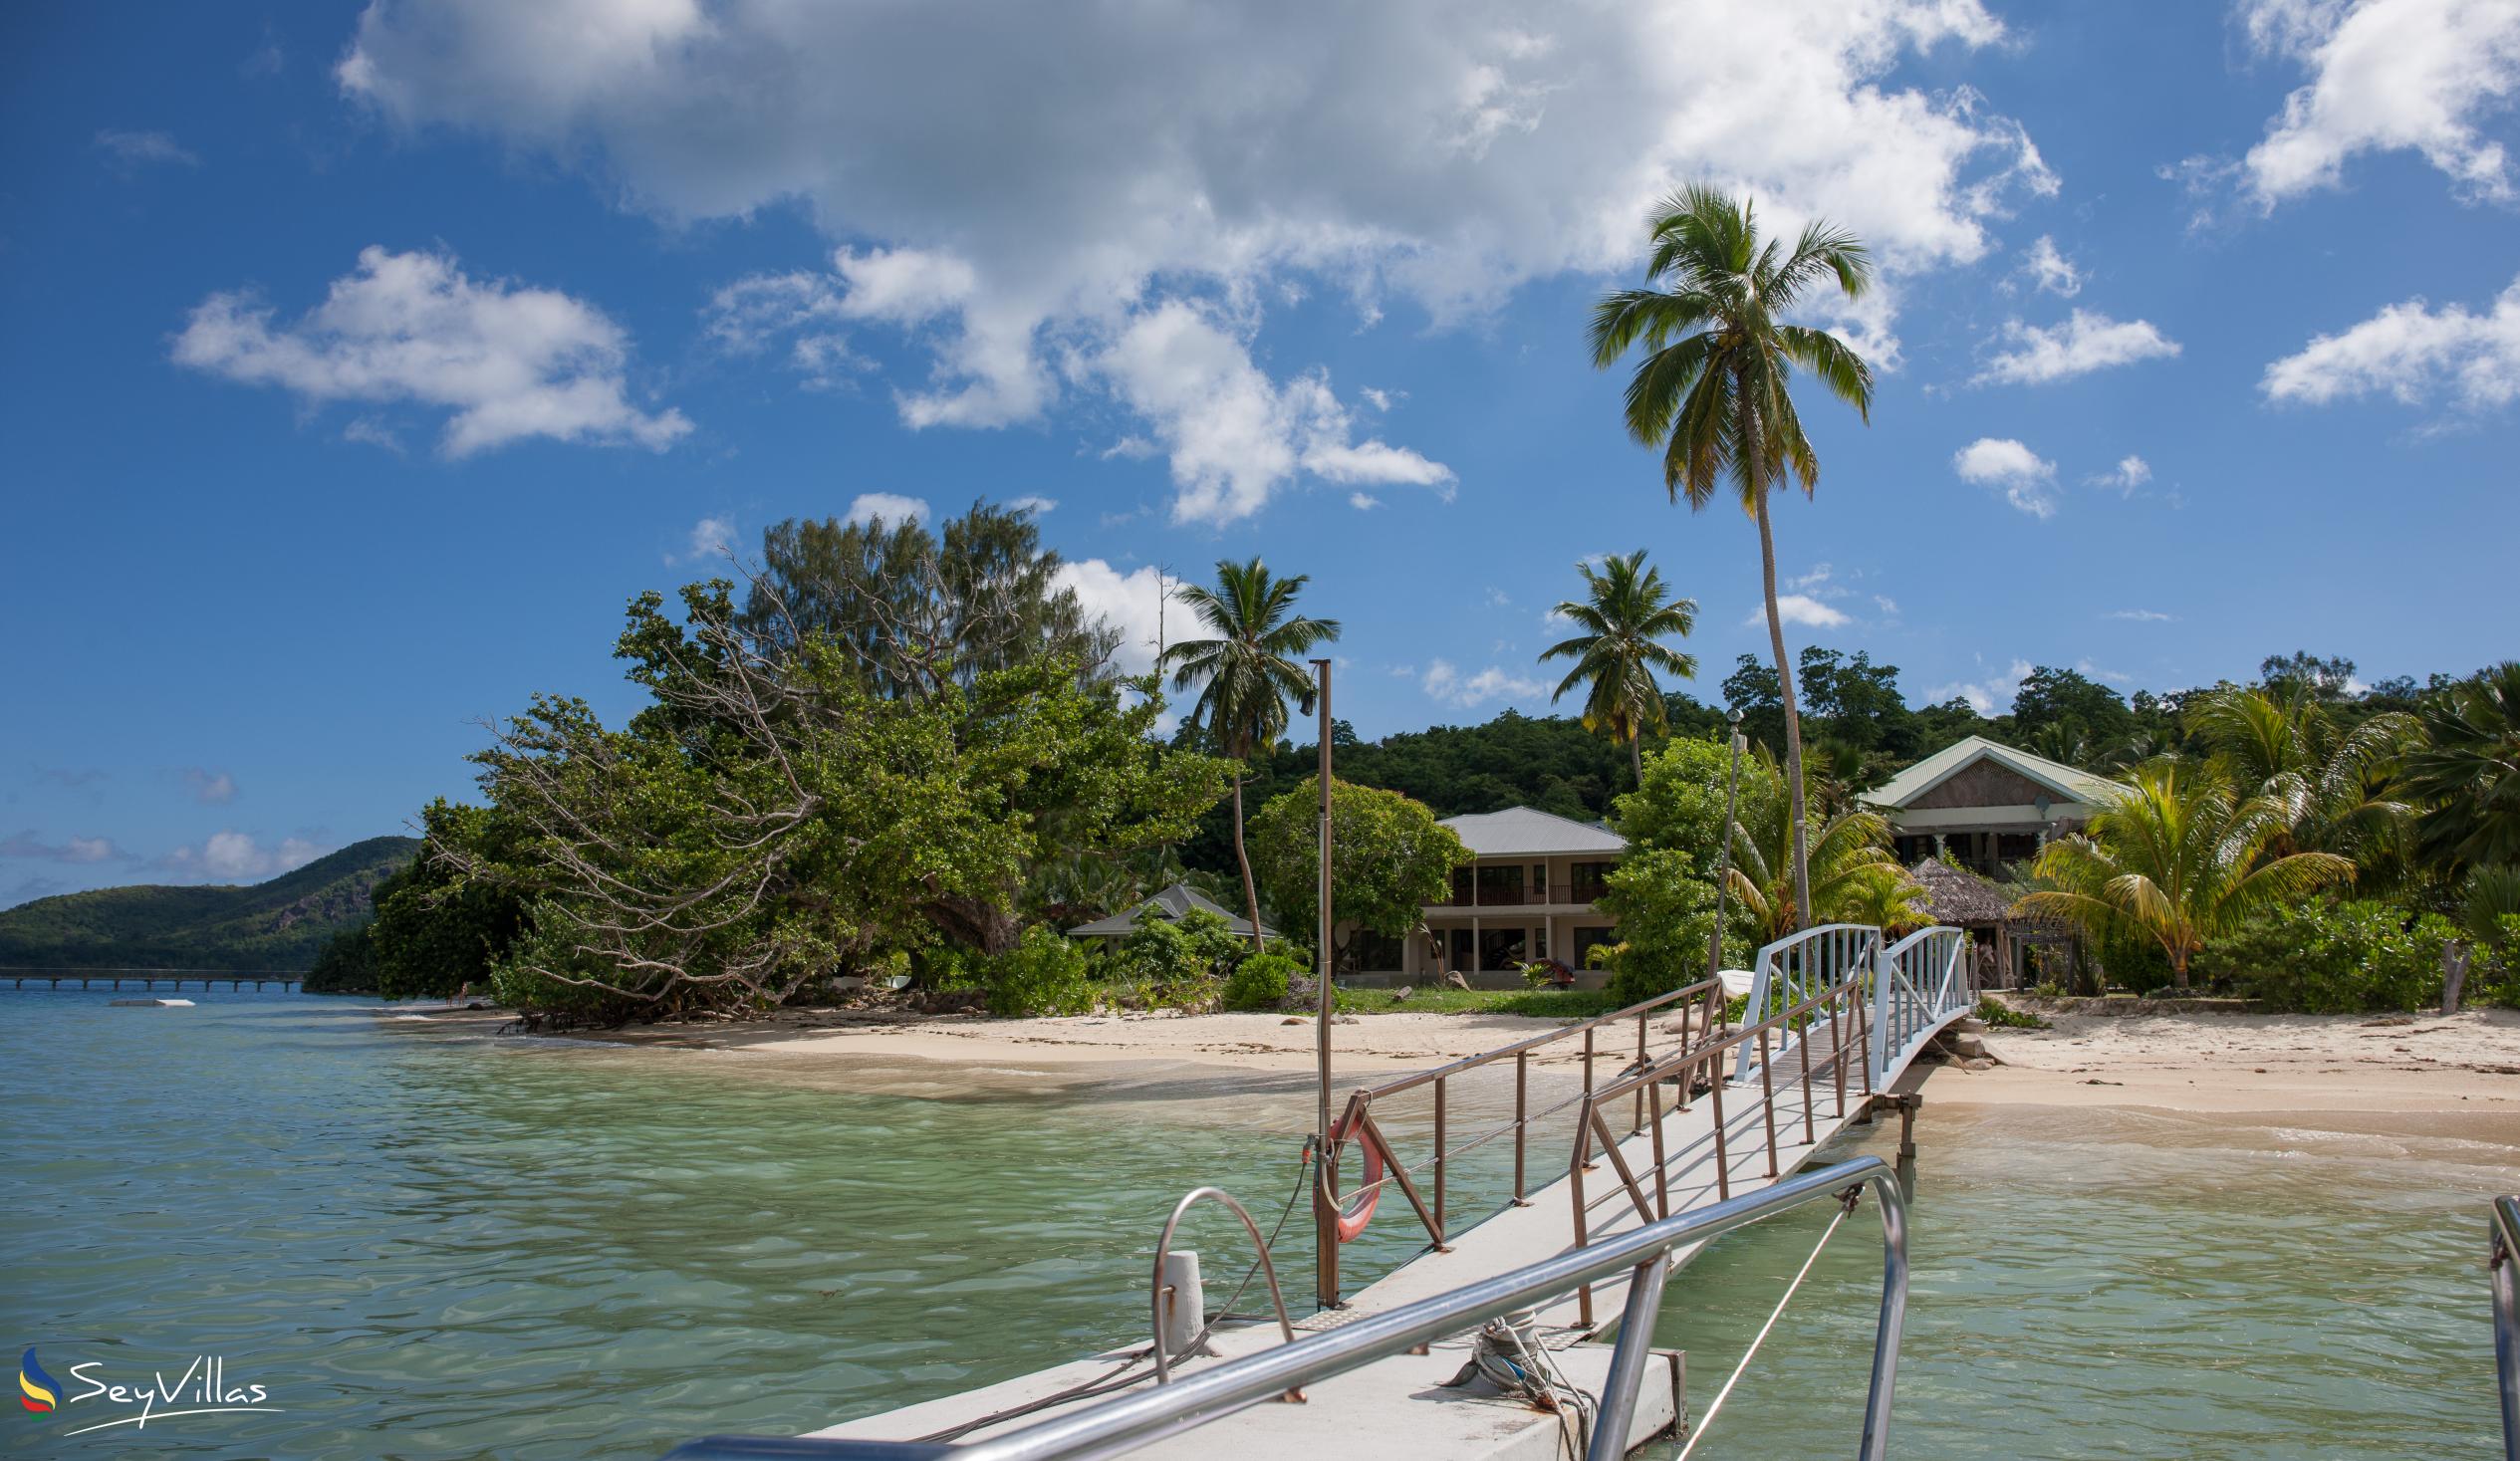 Foto 18: Villa de Cerf - Location - Cerf Island (Seychelles)